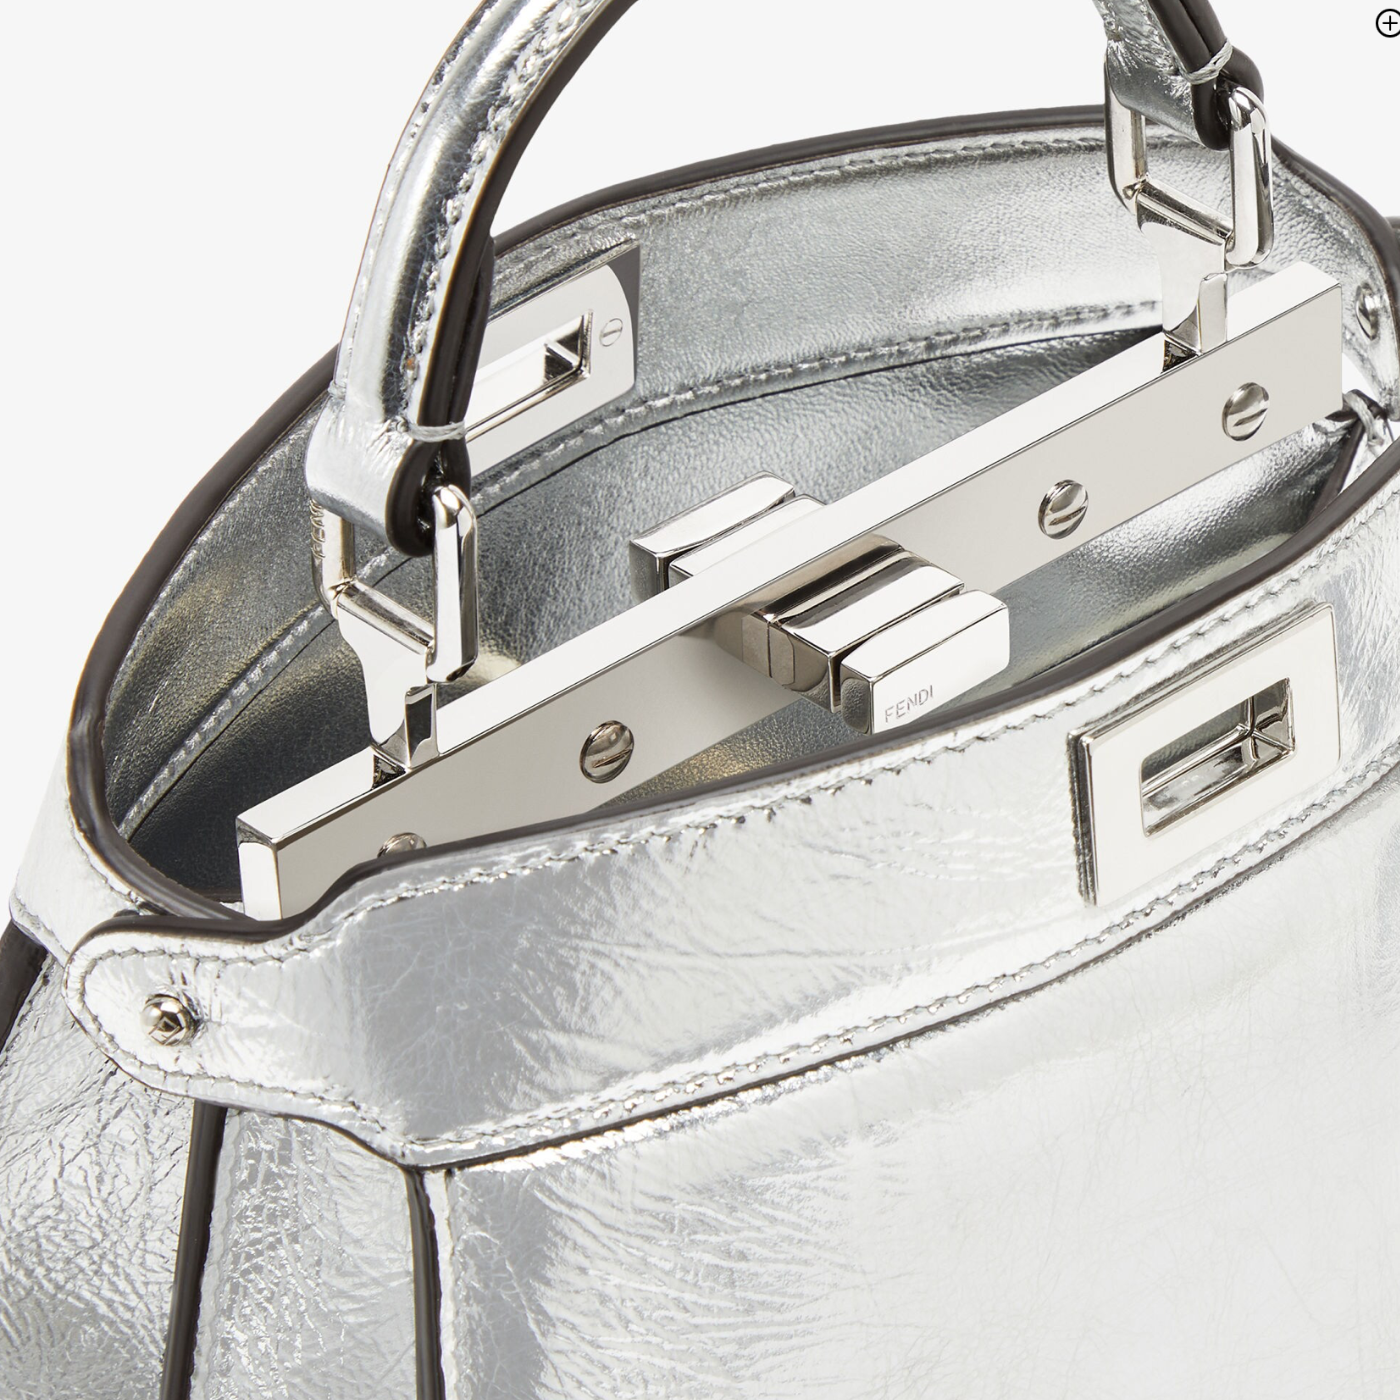 Peekaboo ISeeU Small Bag in Silver Handbags FENDI - LOLAMIR